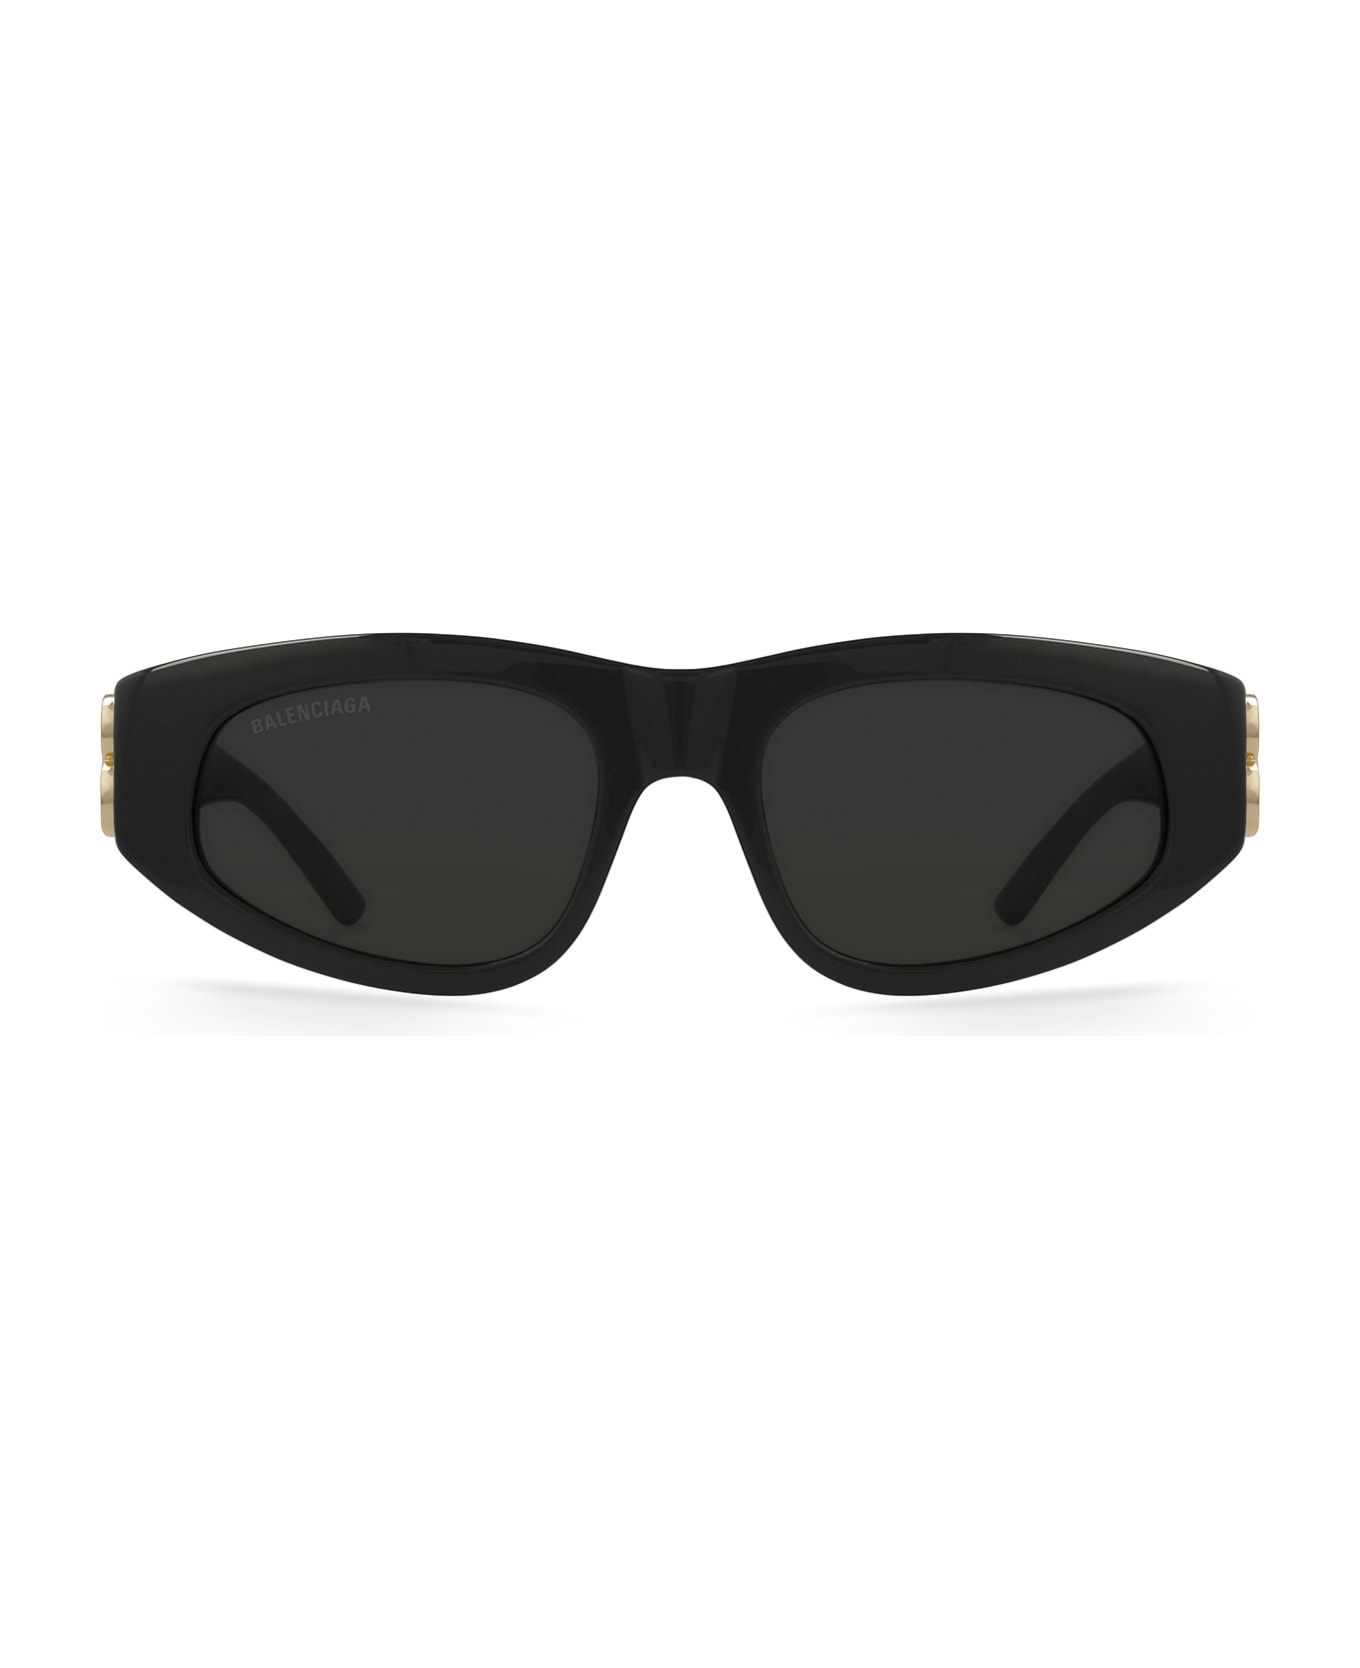 Balenciaga Eyewear Dynasty D-frame Sunglasses - shiny black